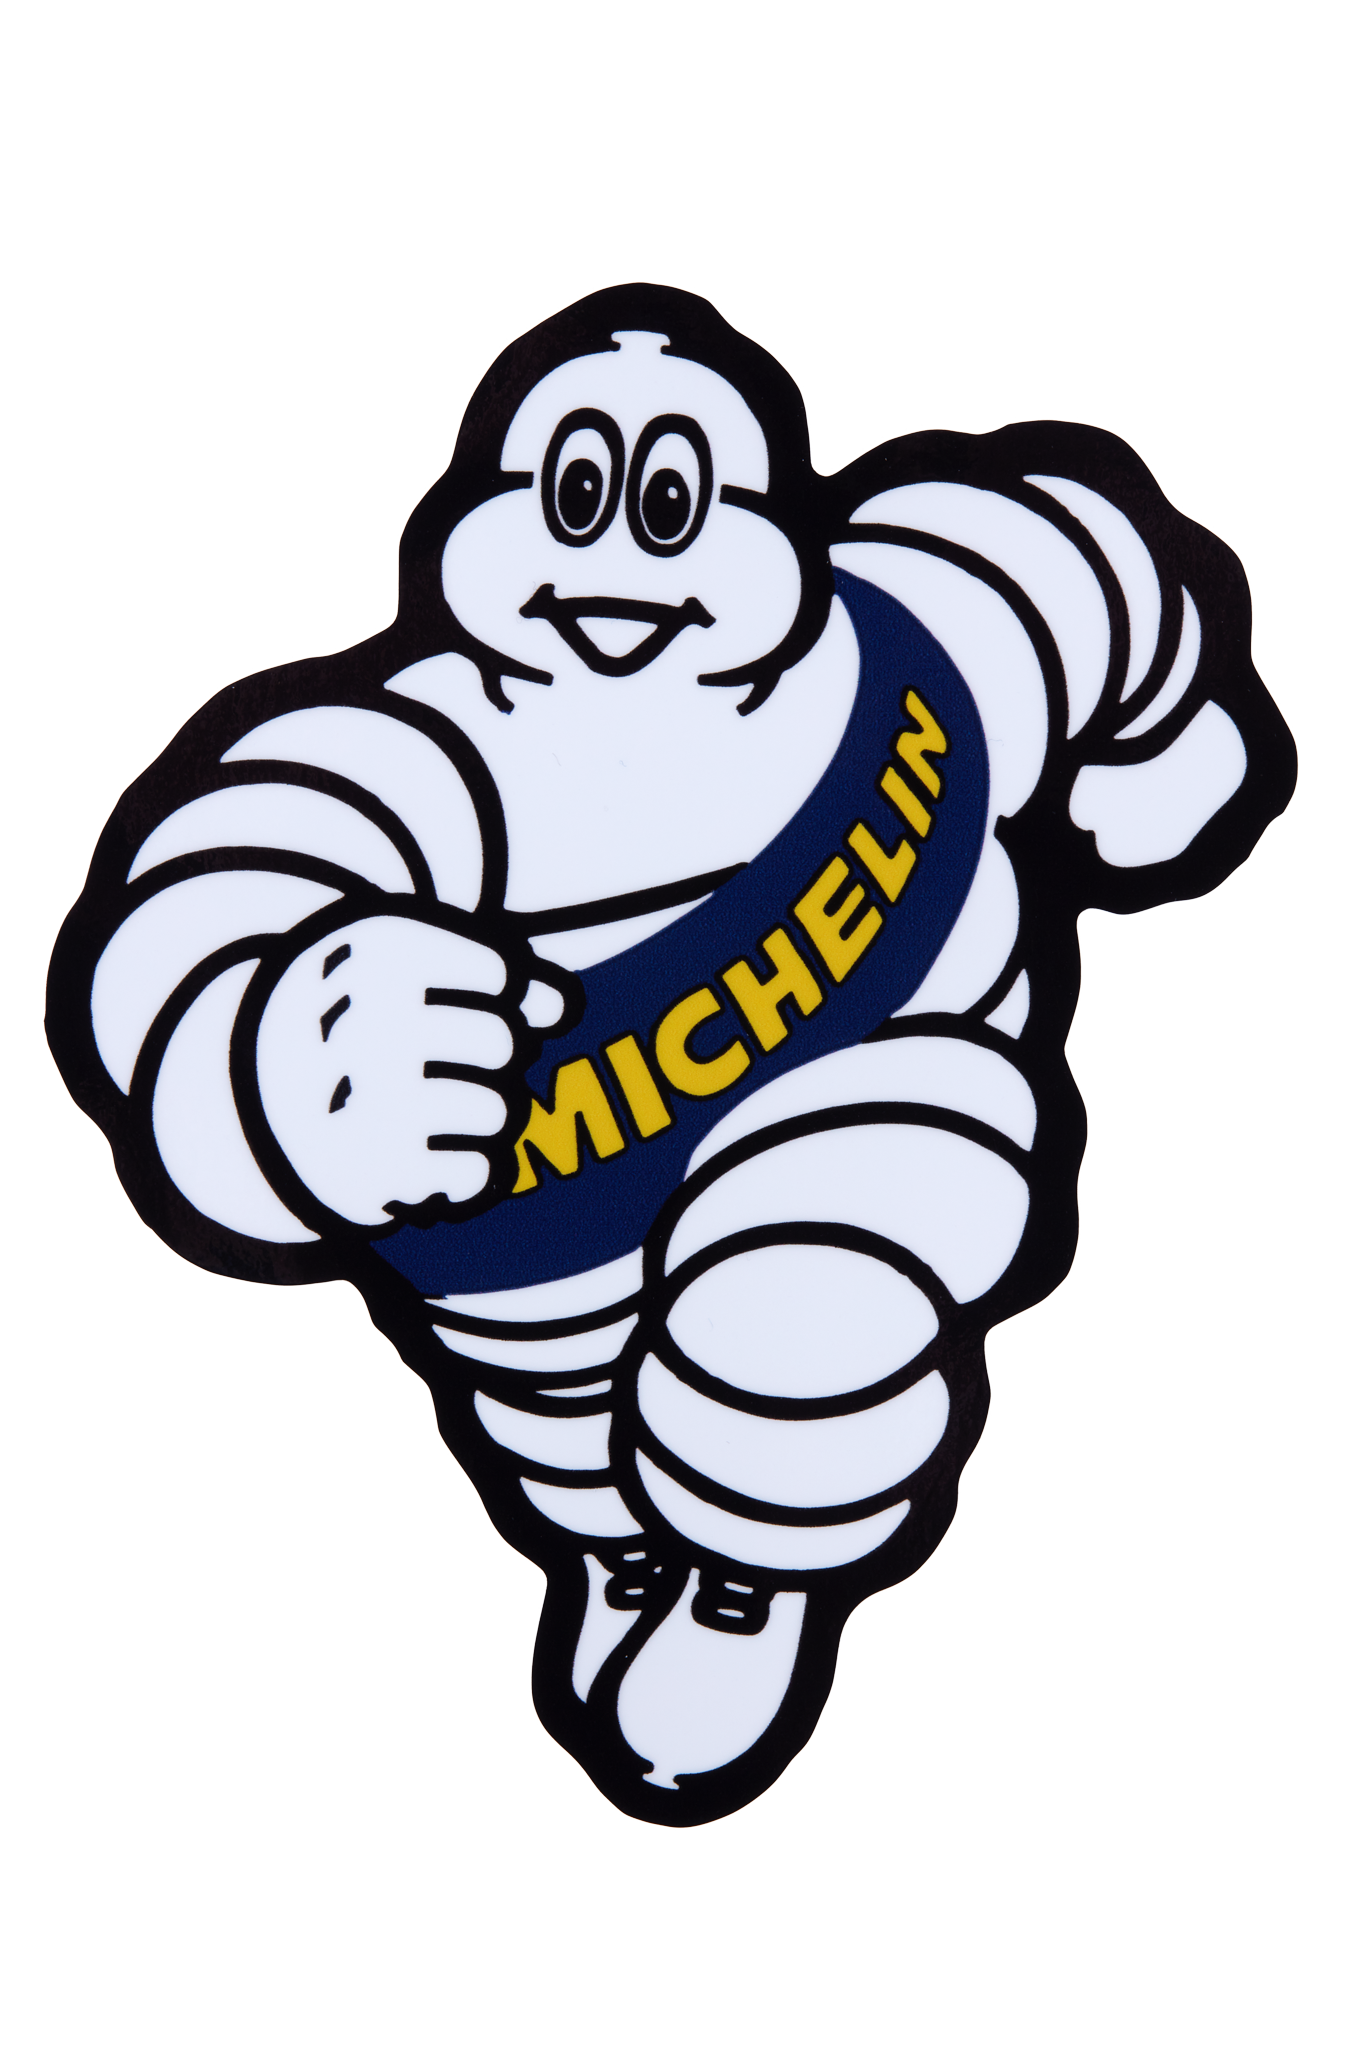 Autocollant Bonhomme Michelin